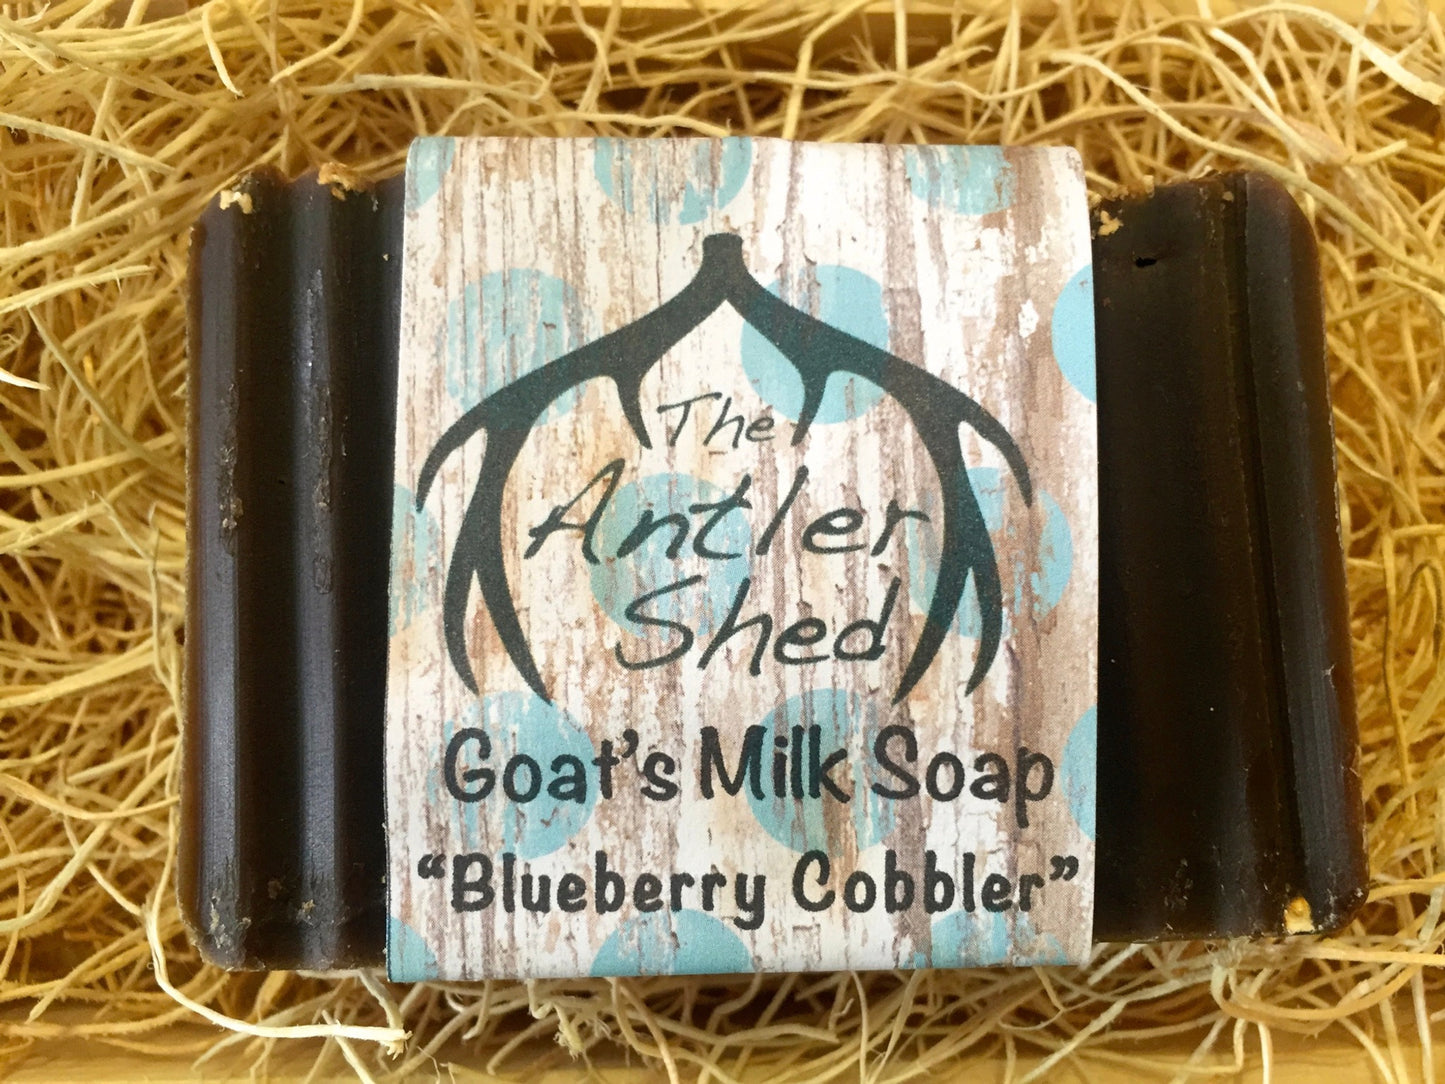 Blueberry Cobbler Goats Milk Soap